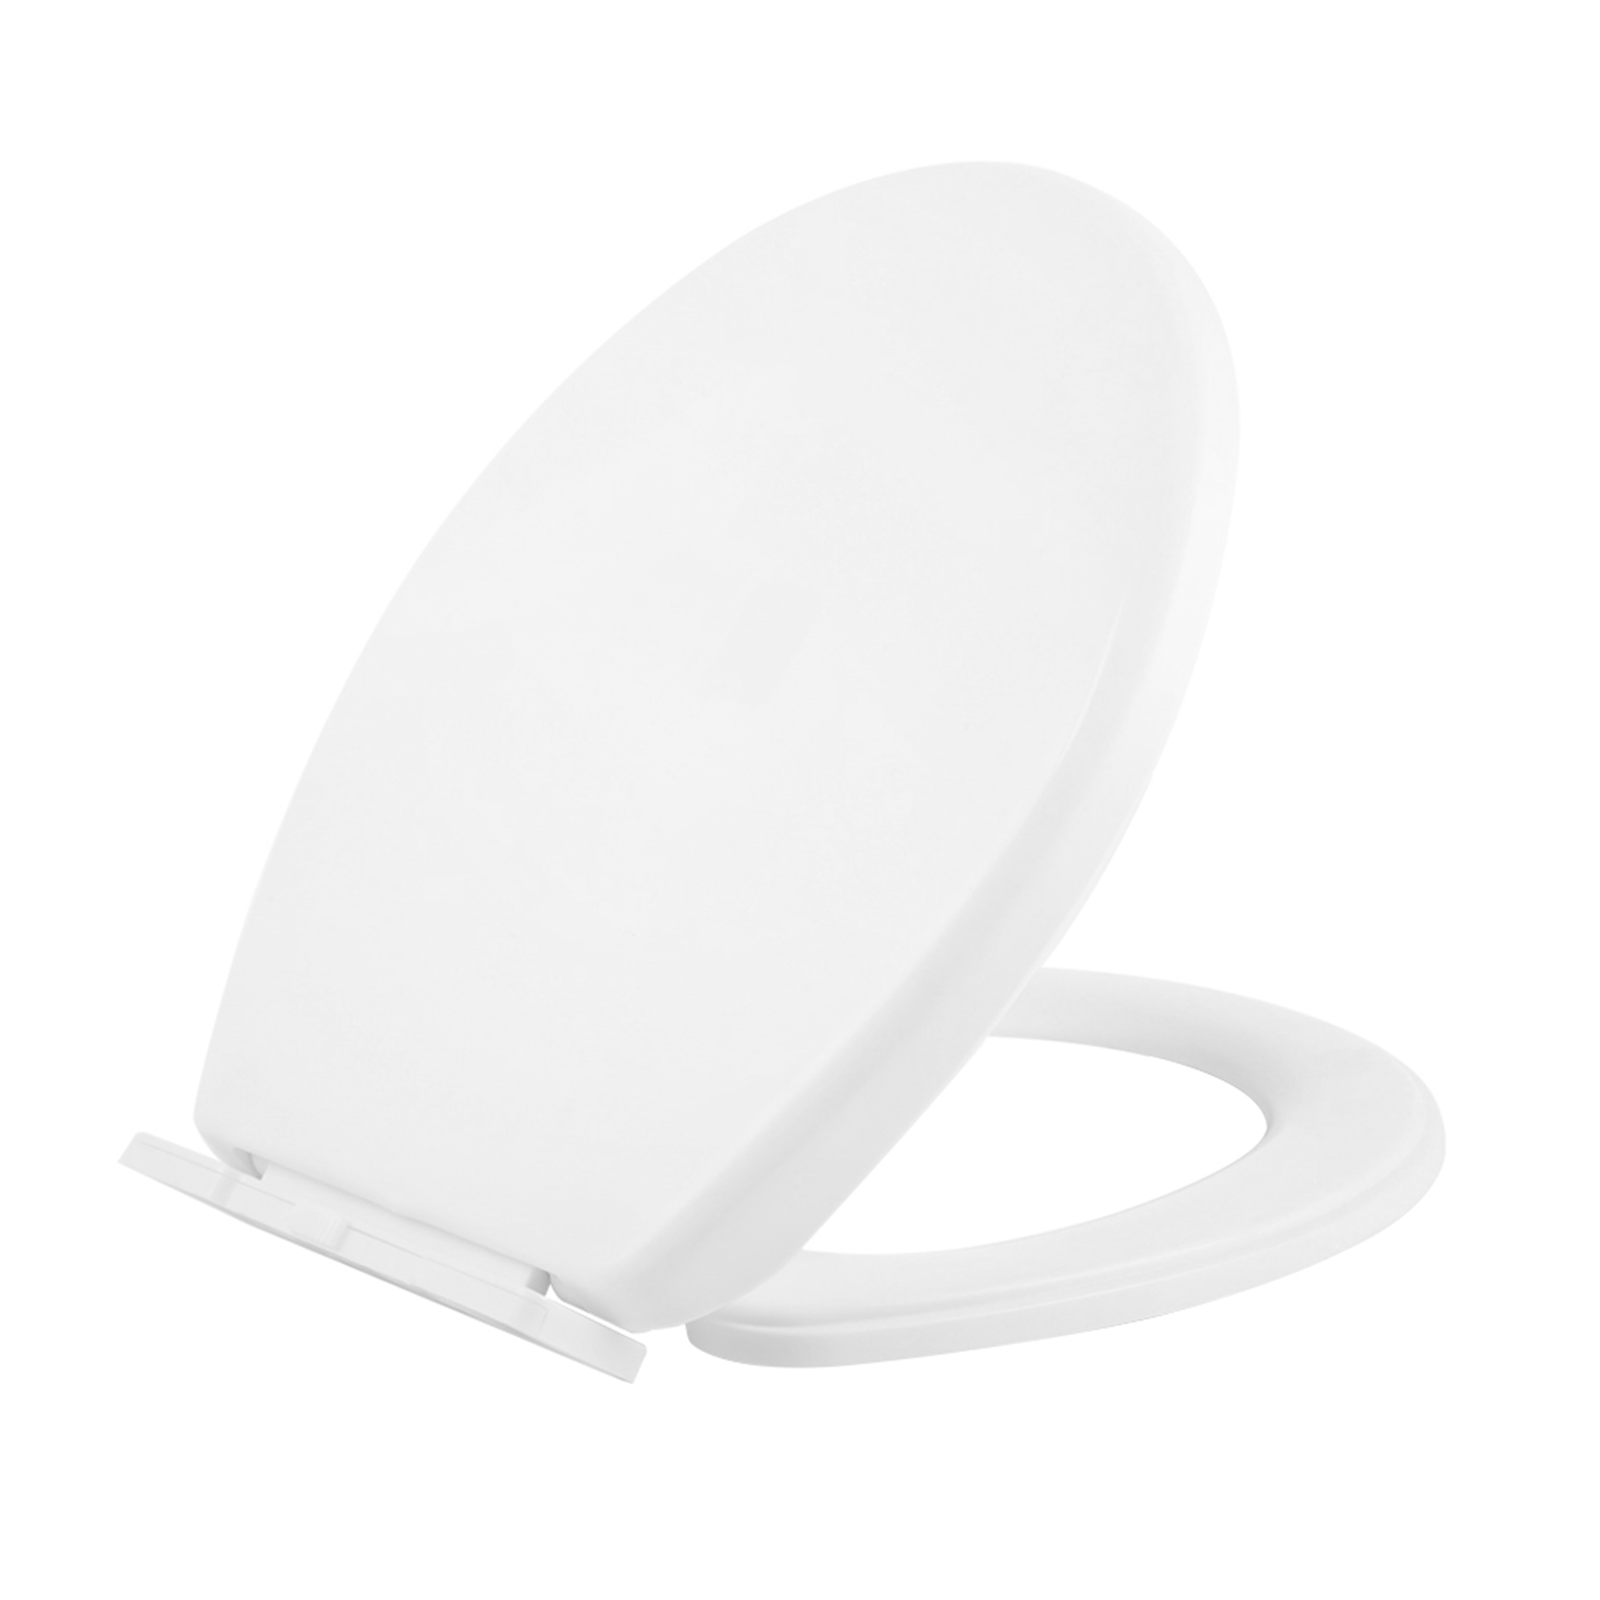 Miibox Removable Round Bowl Matte White Toilet Seat, with Nonslip Grip